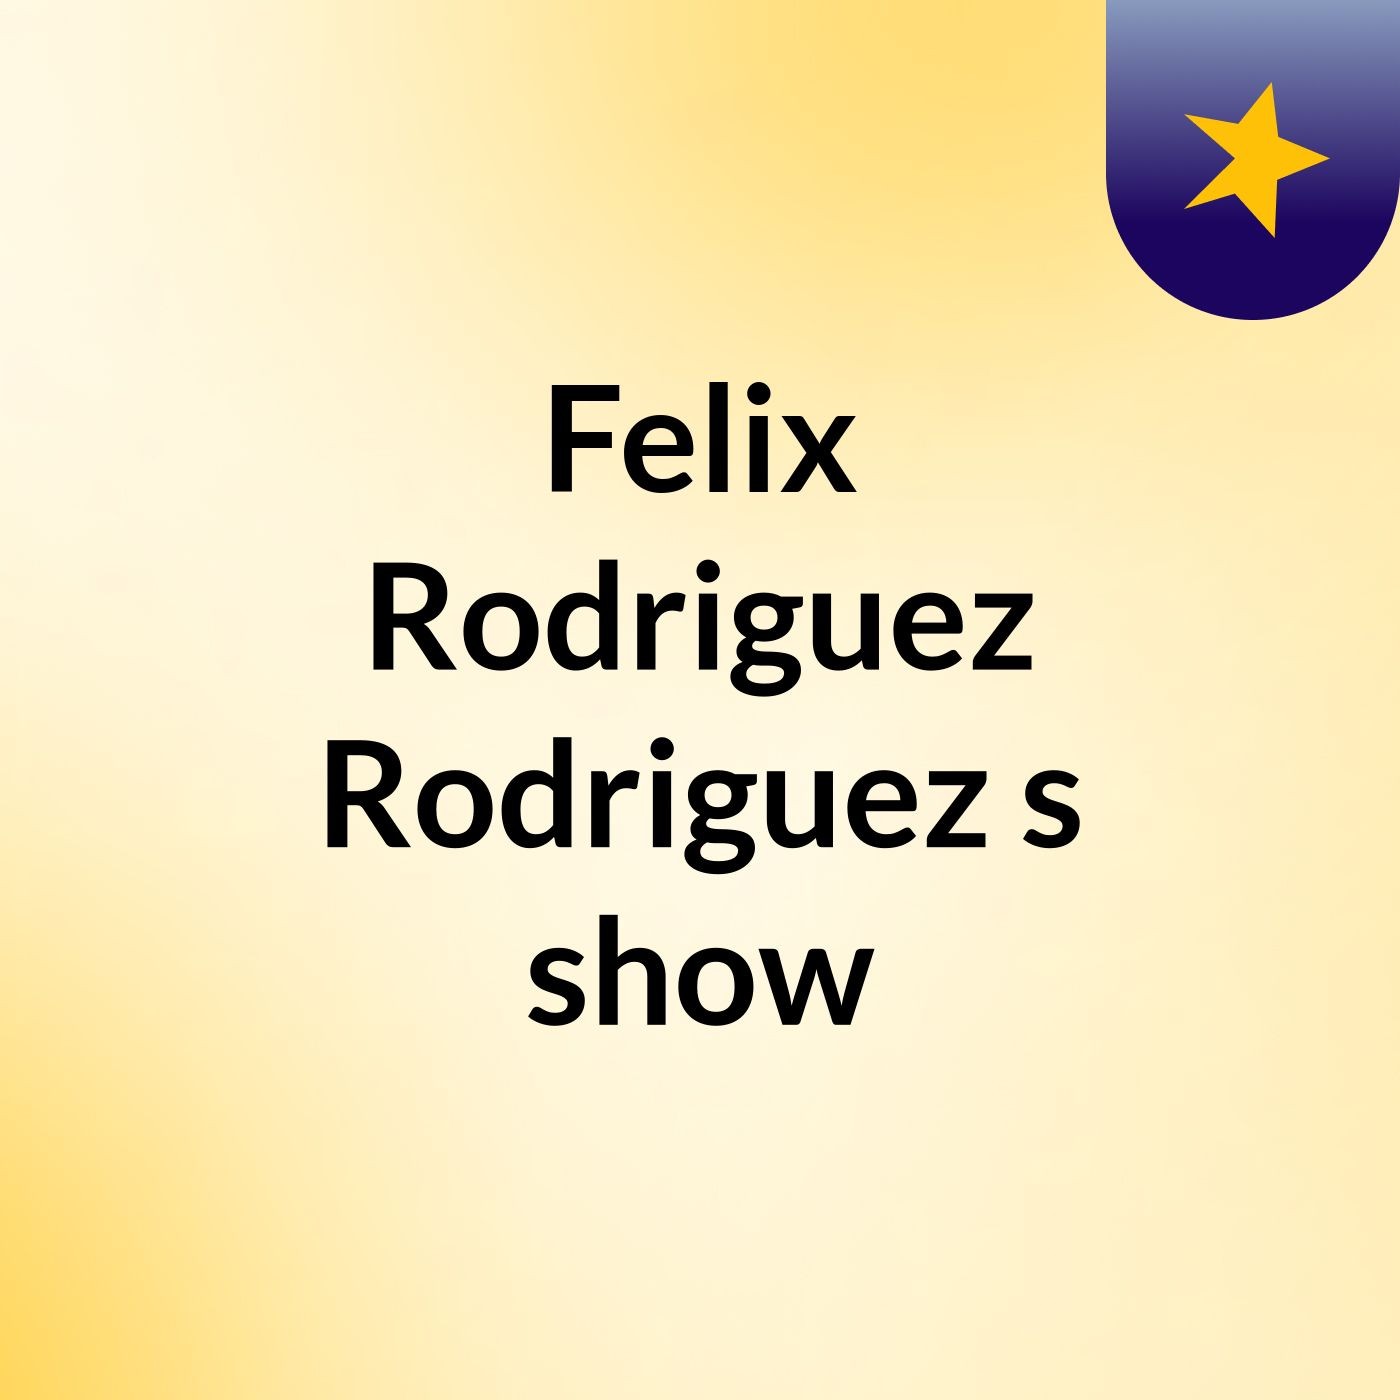 Episodio 14 - Felix Rodriguez Rodriguez's show